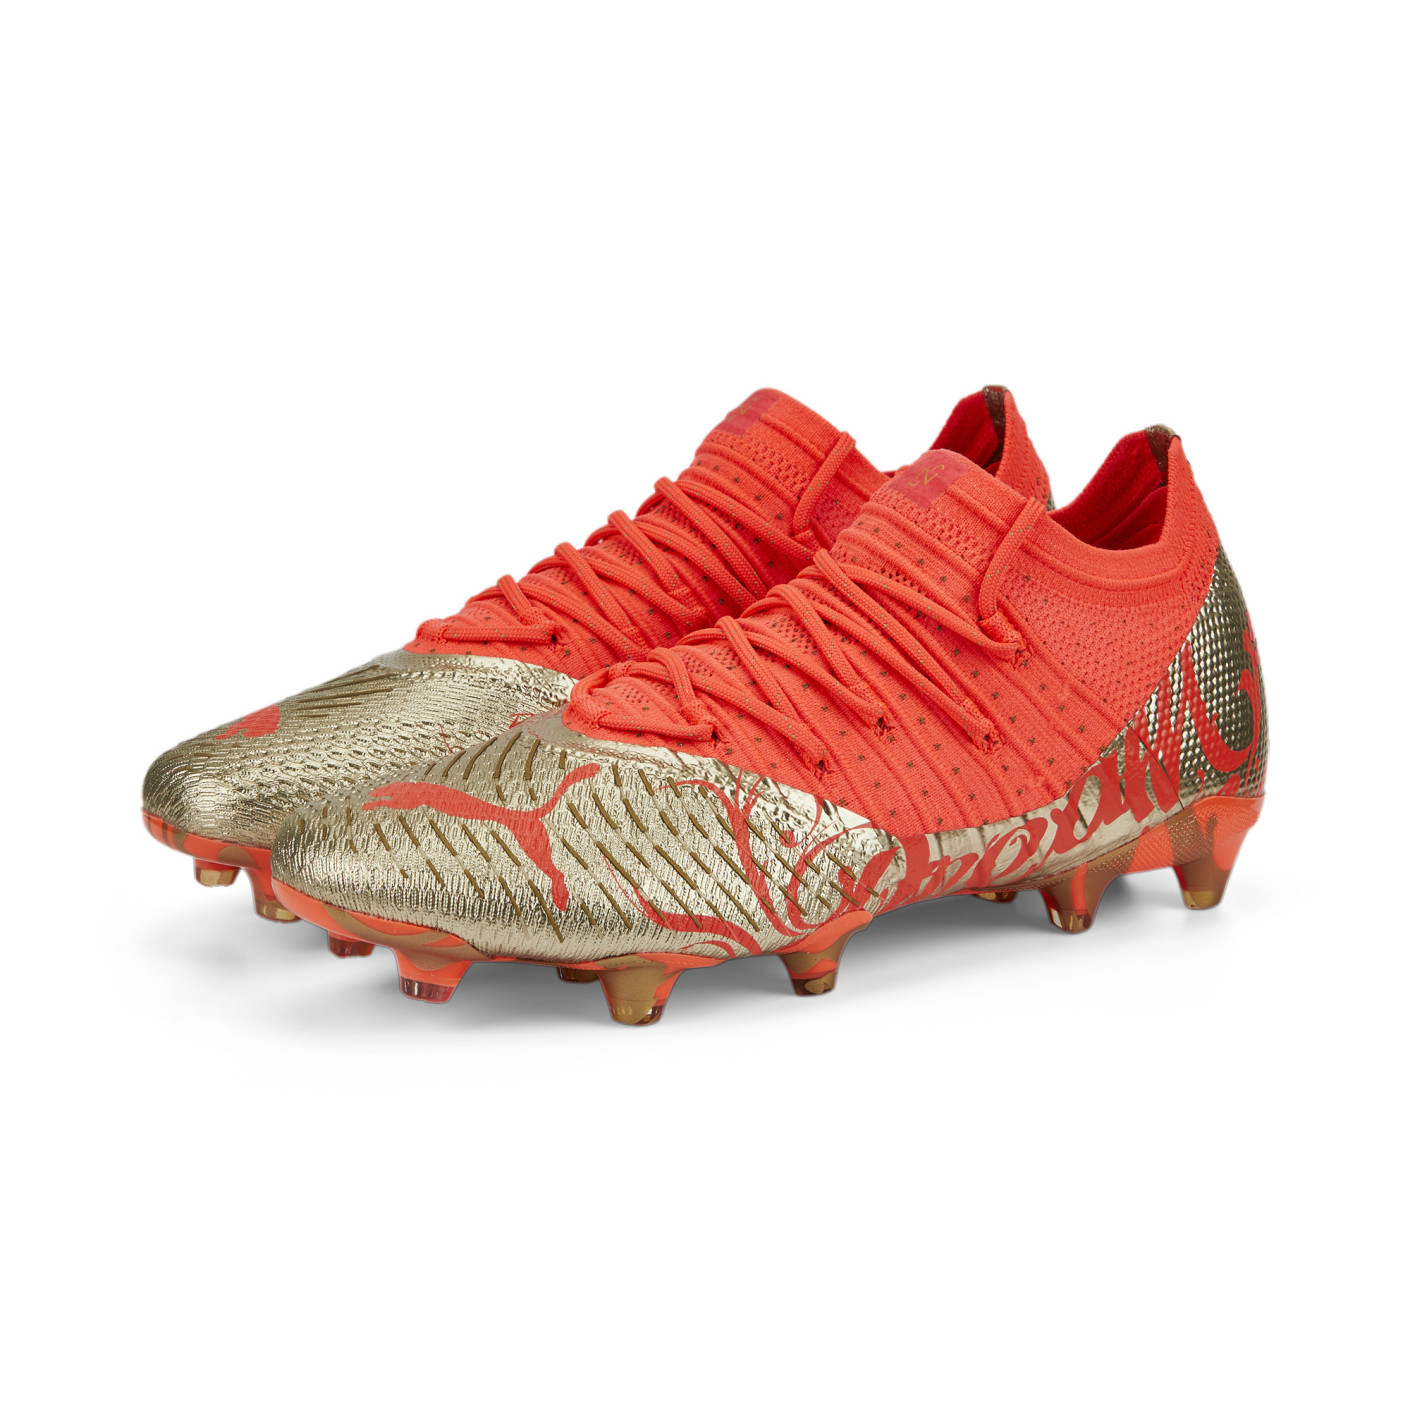 PUMA Future 1.4 Neymar JR Gazon Naturel / Gazon Artificiel Chaussures de Foot (MG) Orange Or